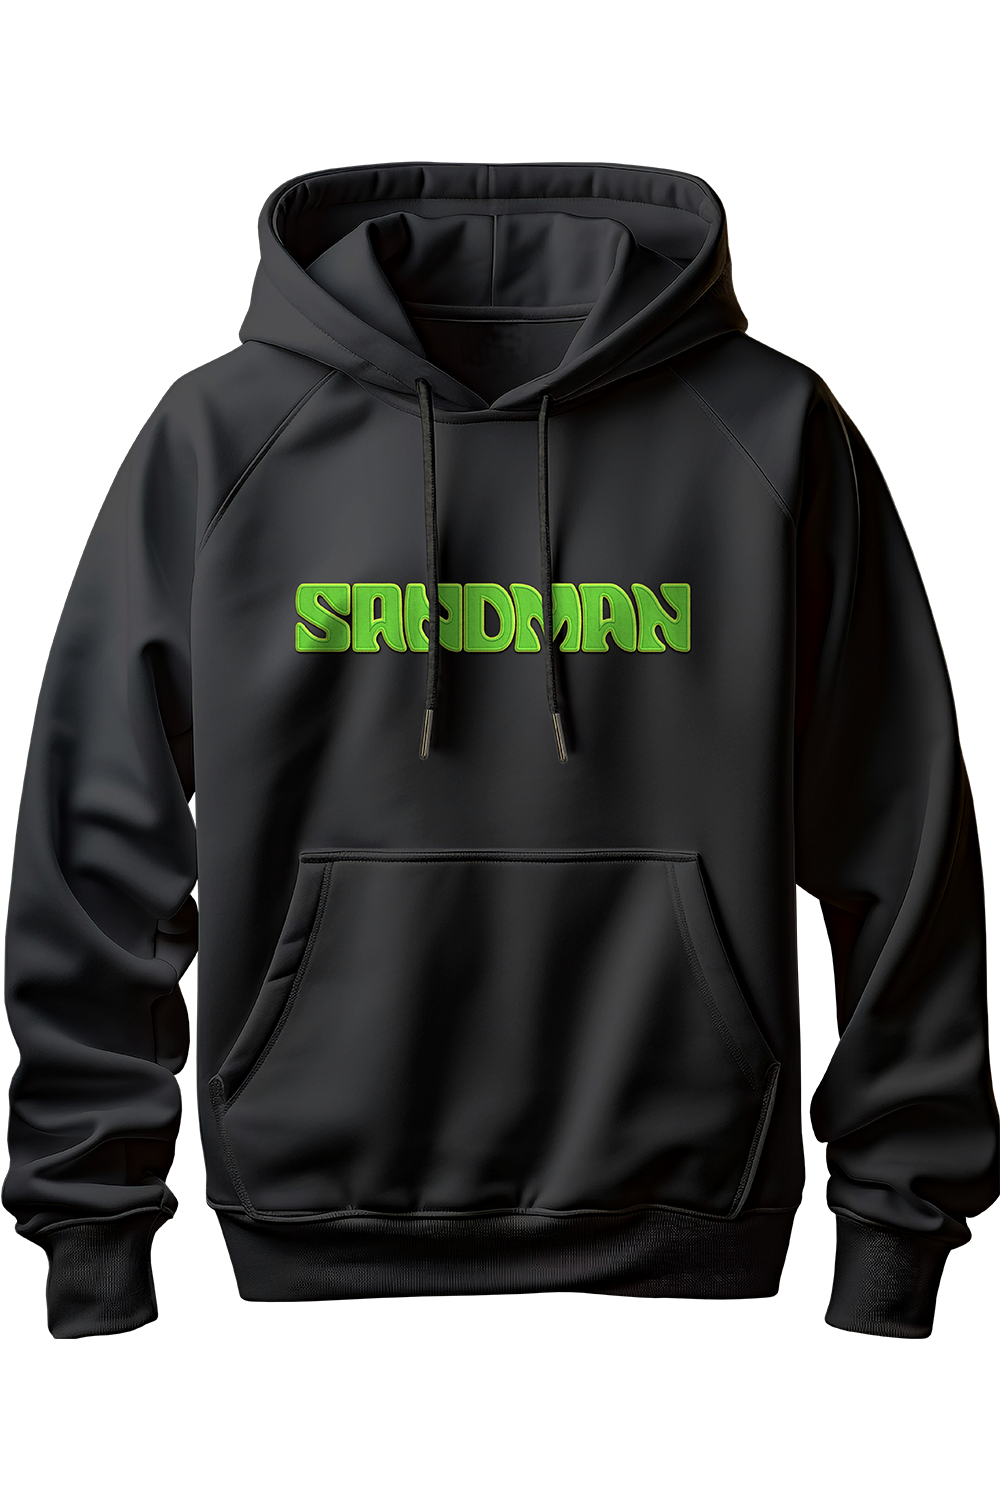 Sandman Supreme Hoodie - Green